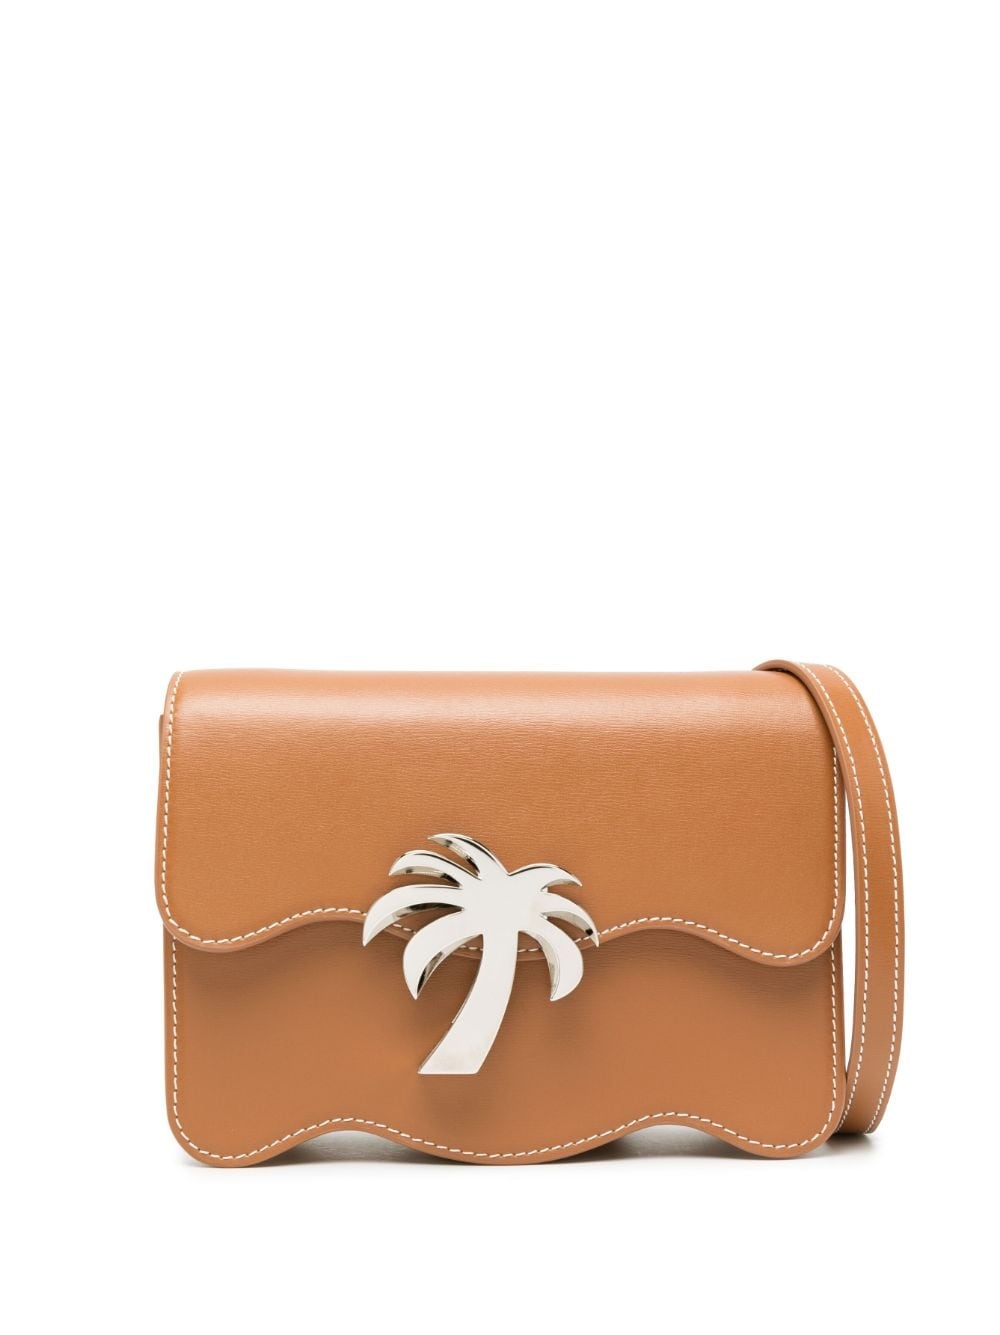 Palm Beach leather crossbody bag - 1